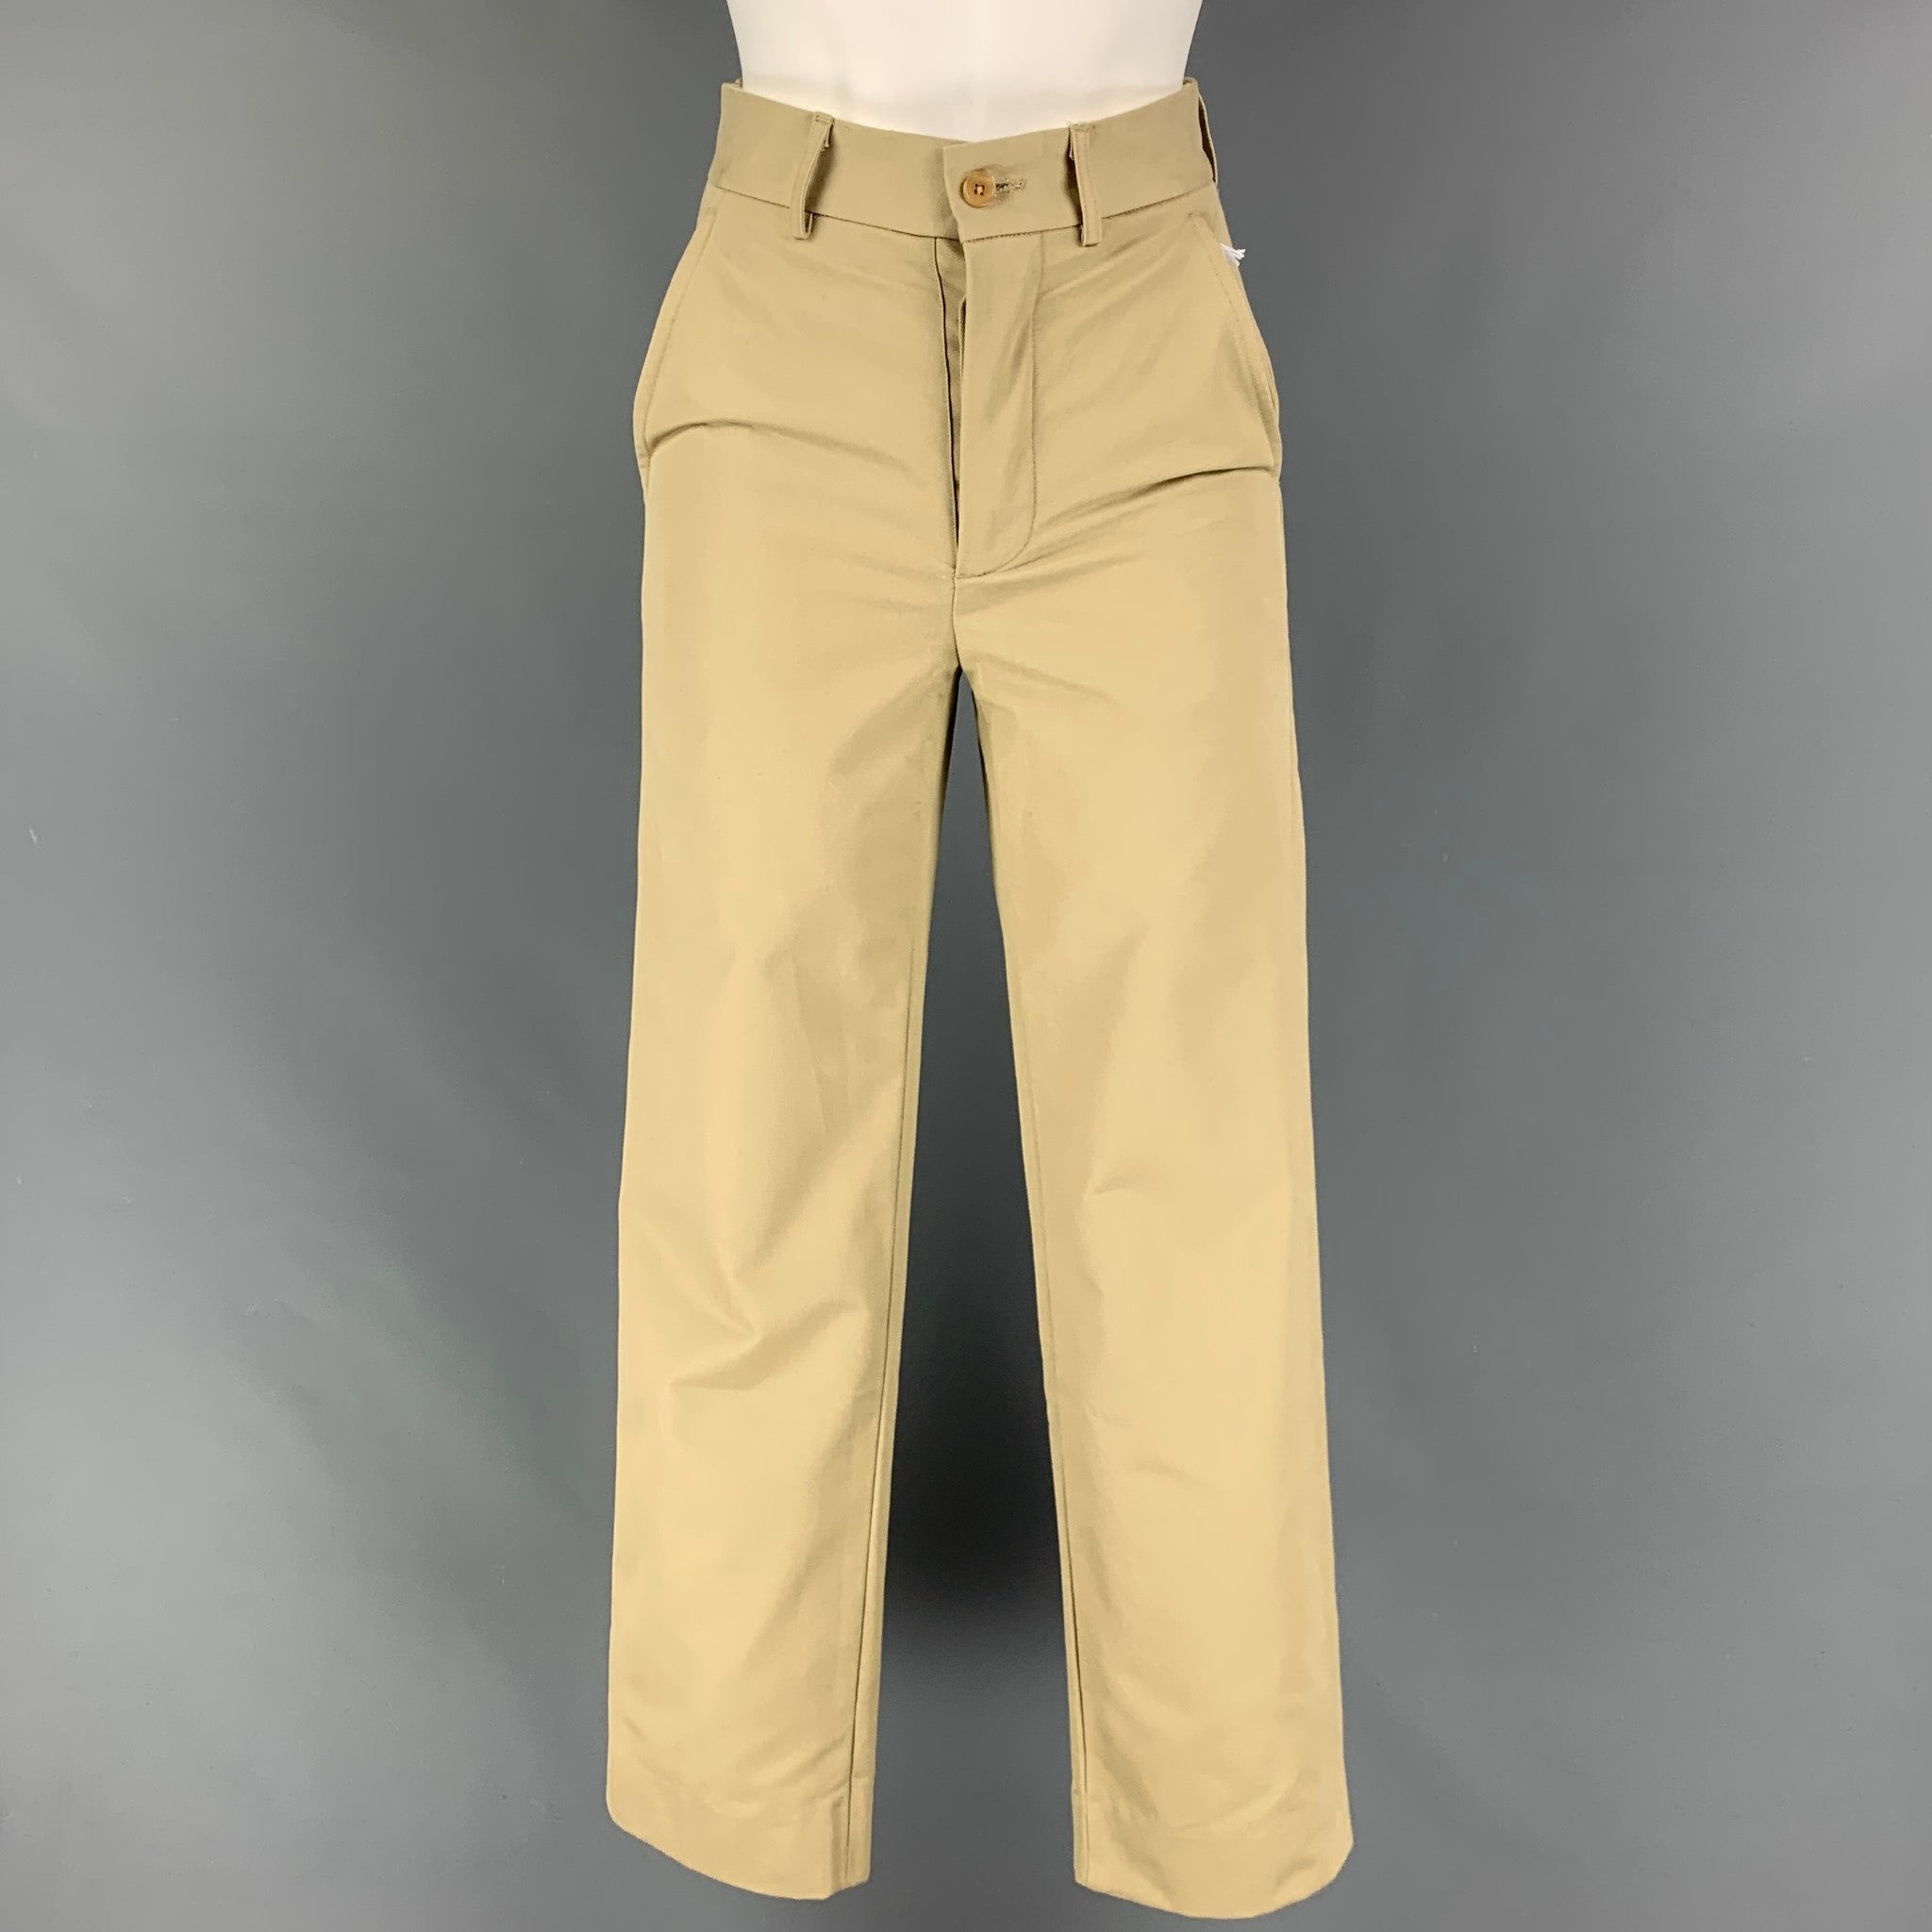 Men's ORIGINAL USE - Skinny Utility Pants - Paris Green Size 26 | eBay